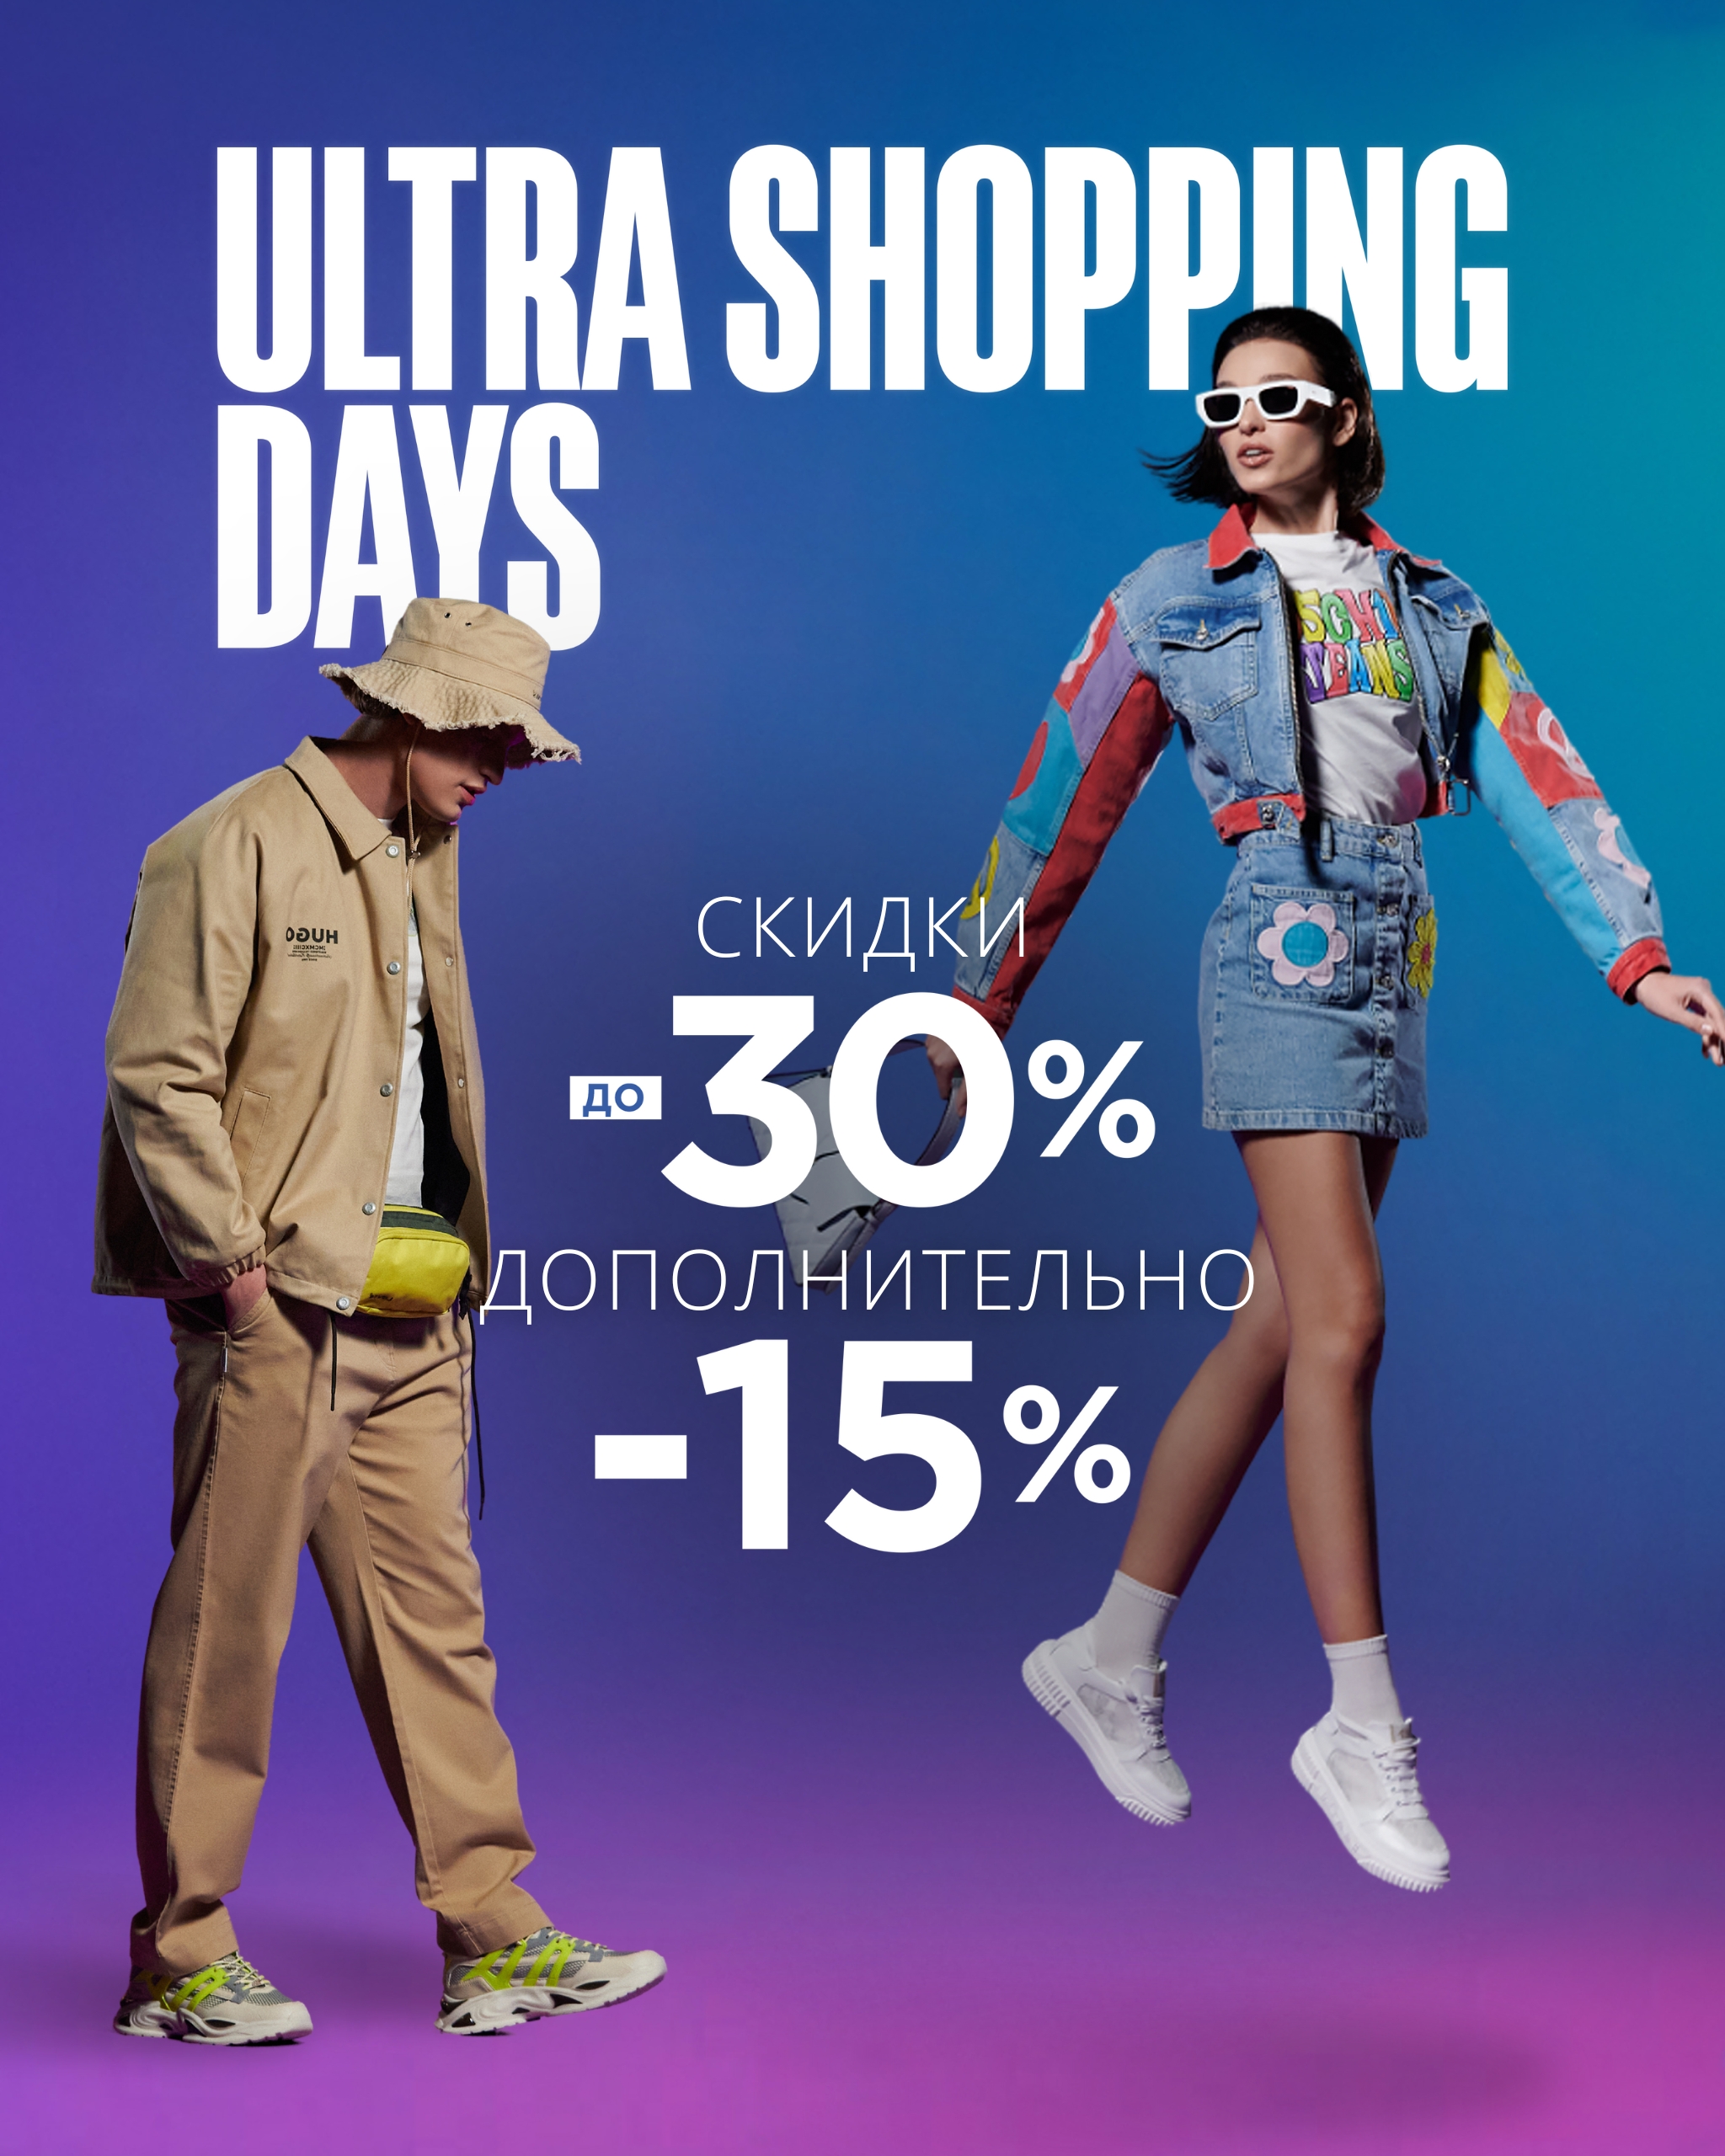 Ultra Shopping Days